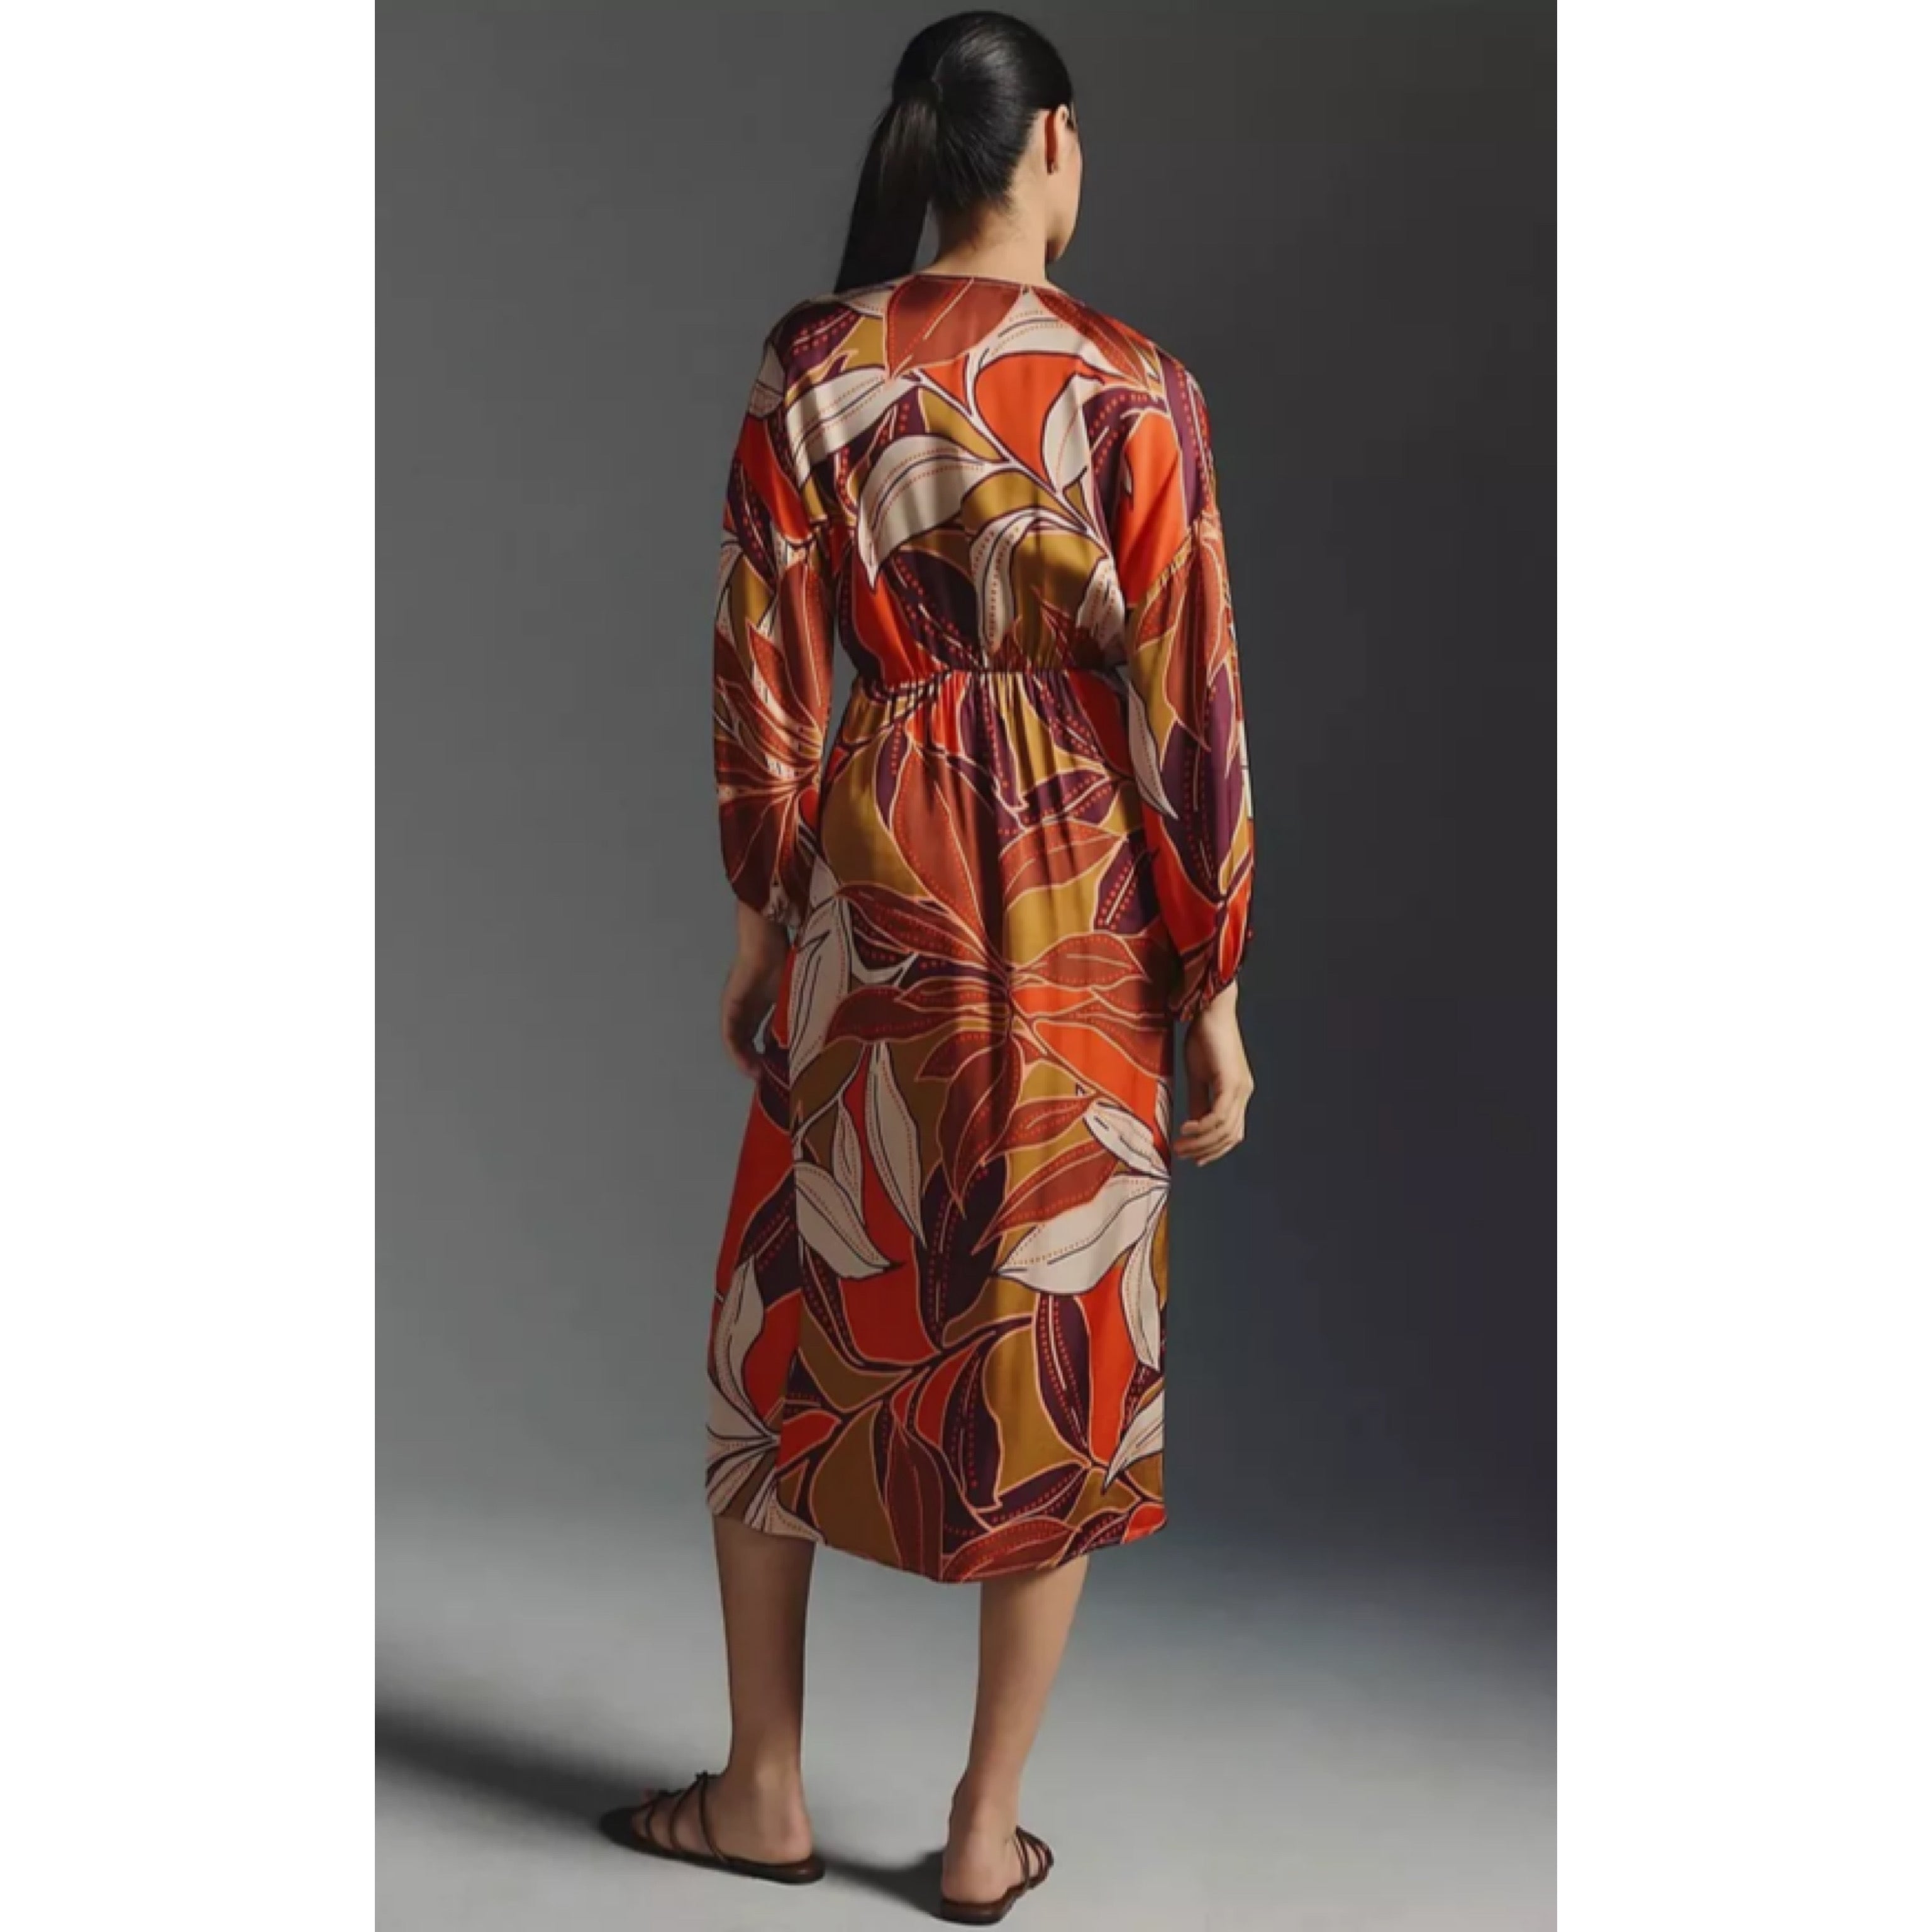 Anthropologie earth-tone print dress, size M